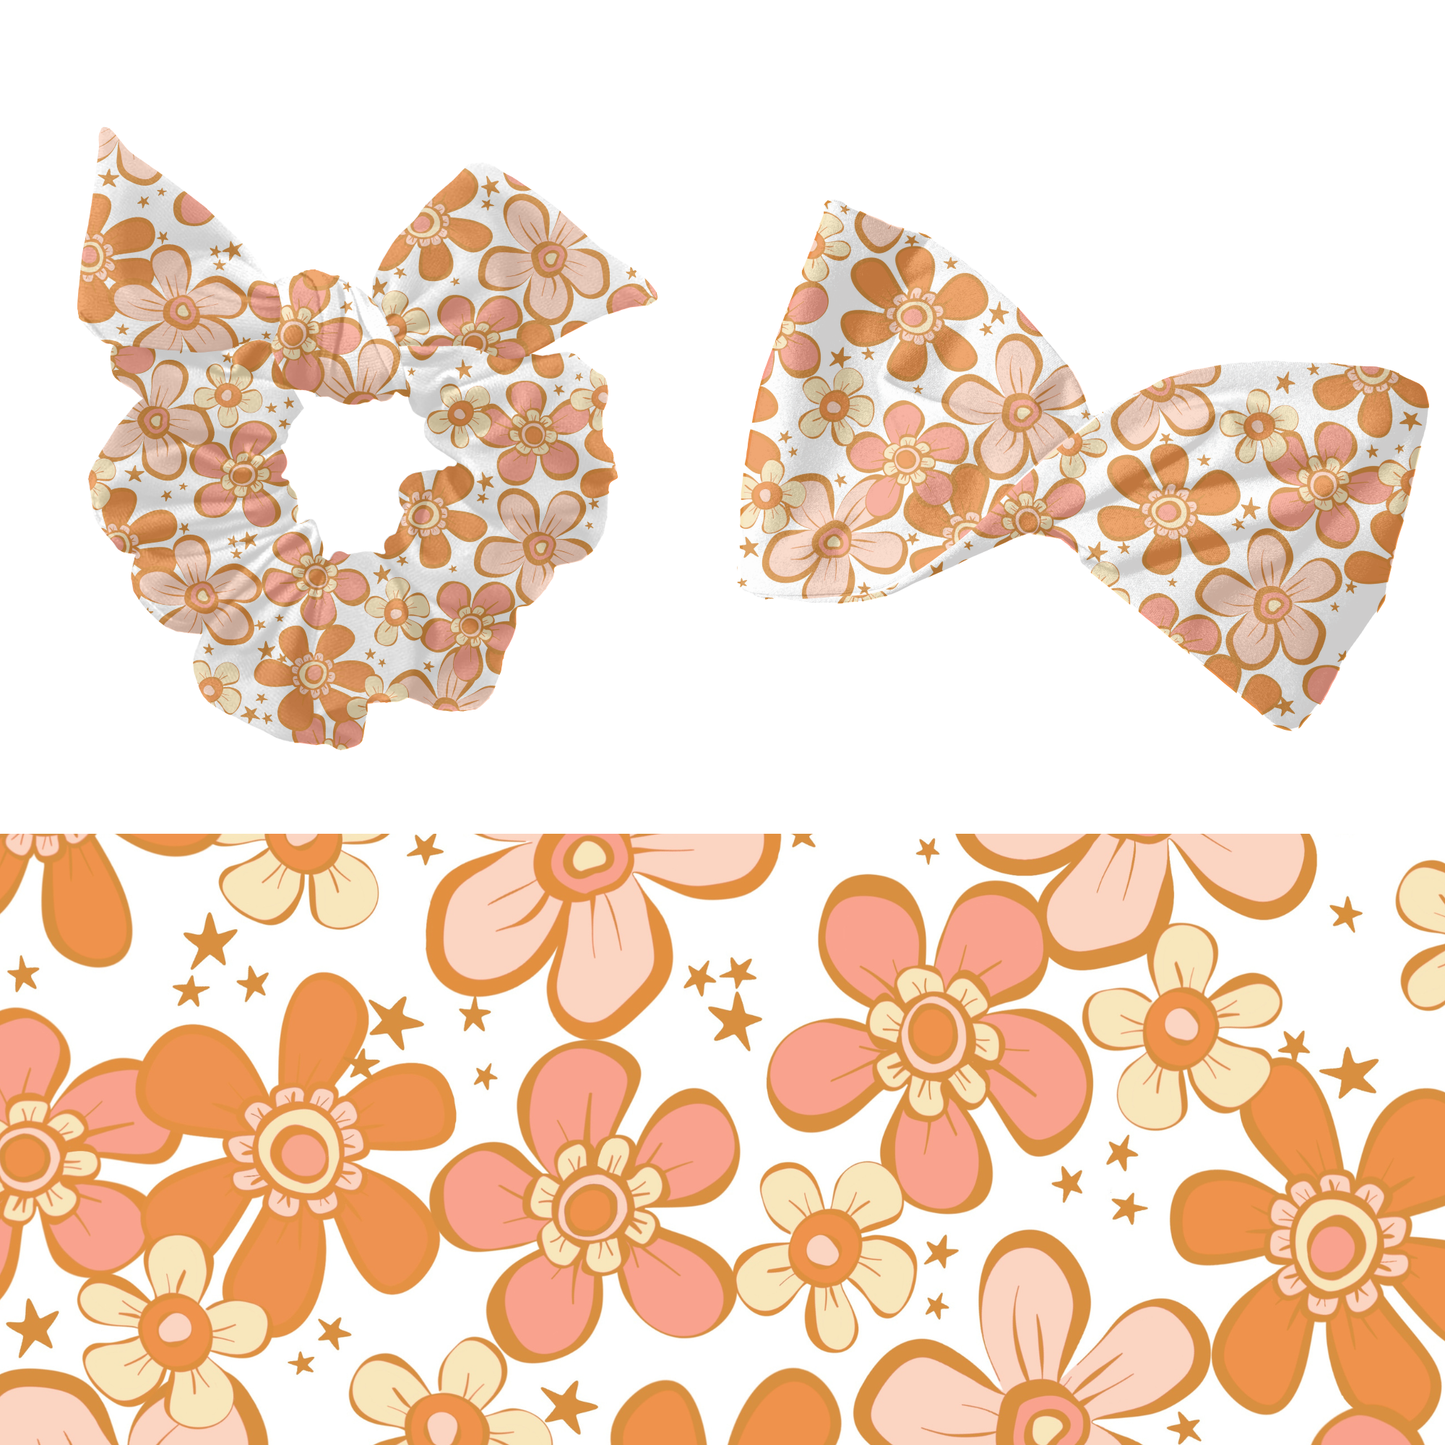 Boho floral seamless pattern